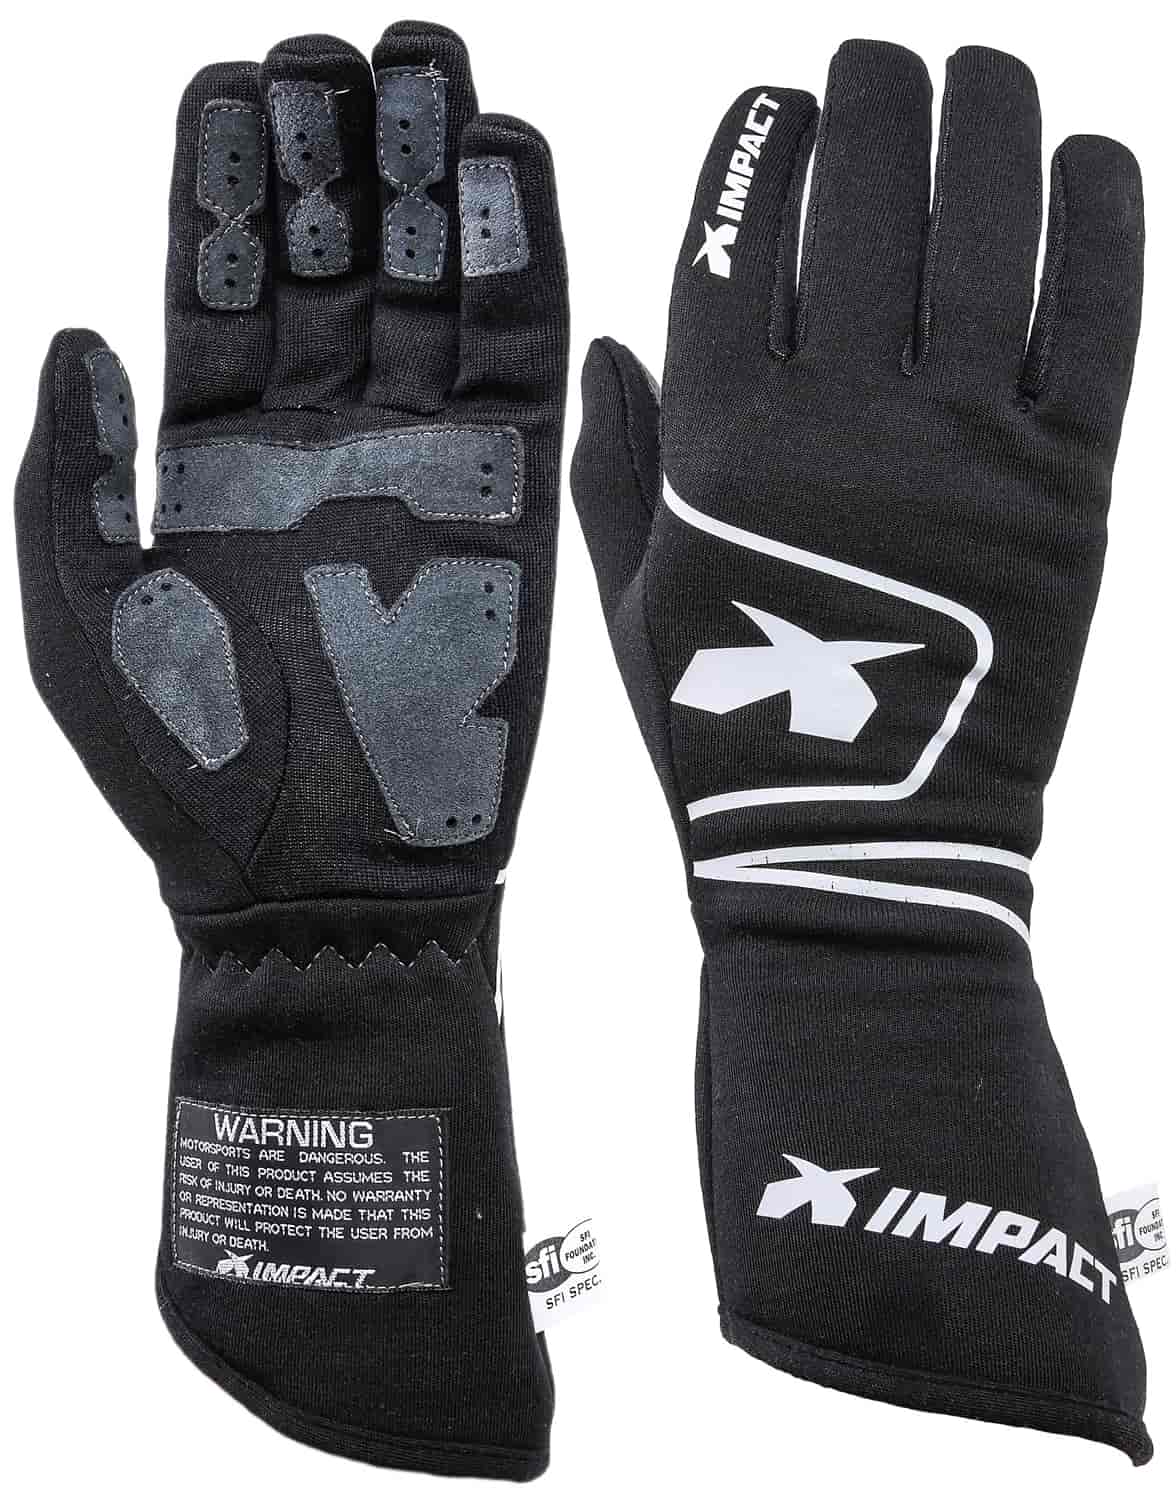 G6 Driving Gloves Large Black SFI-5